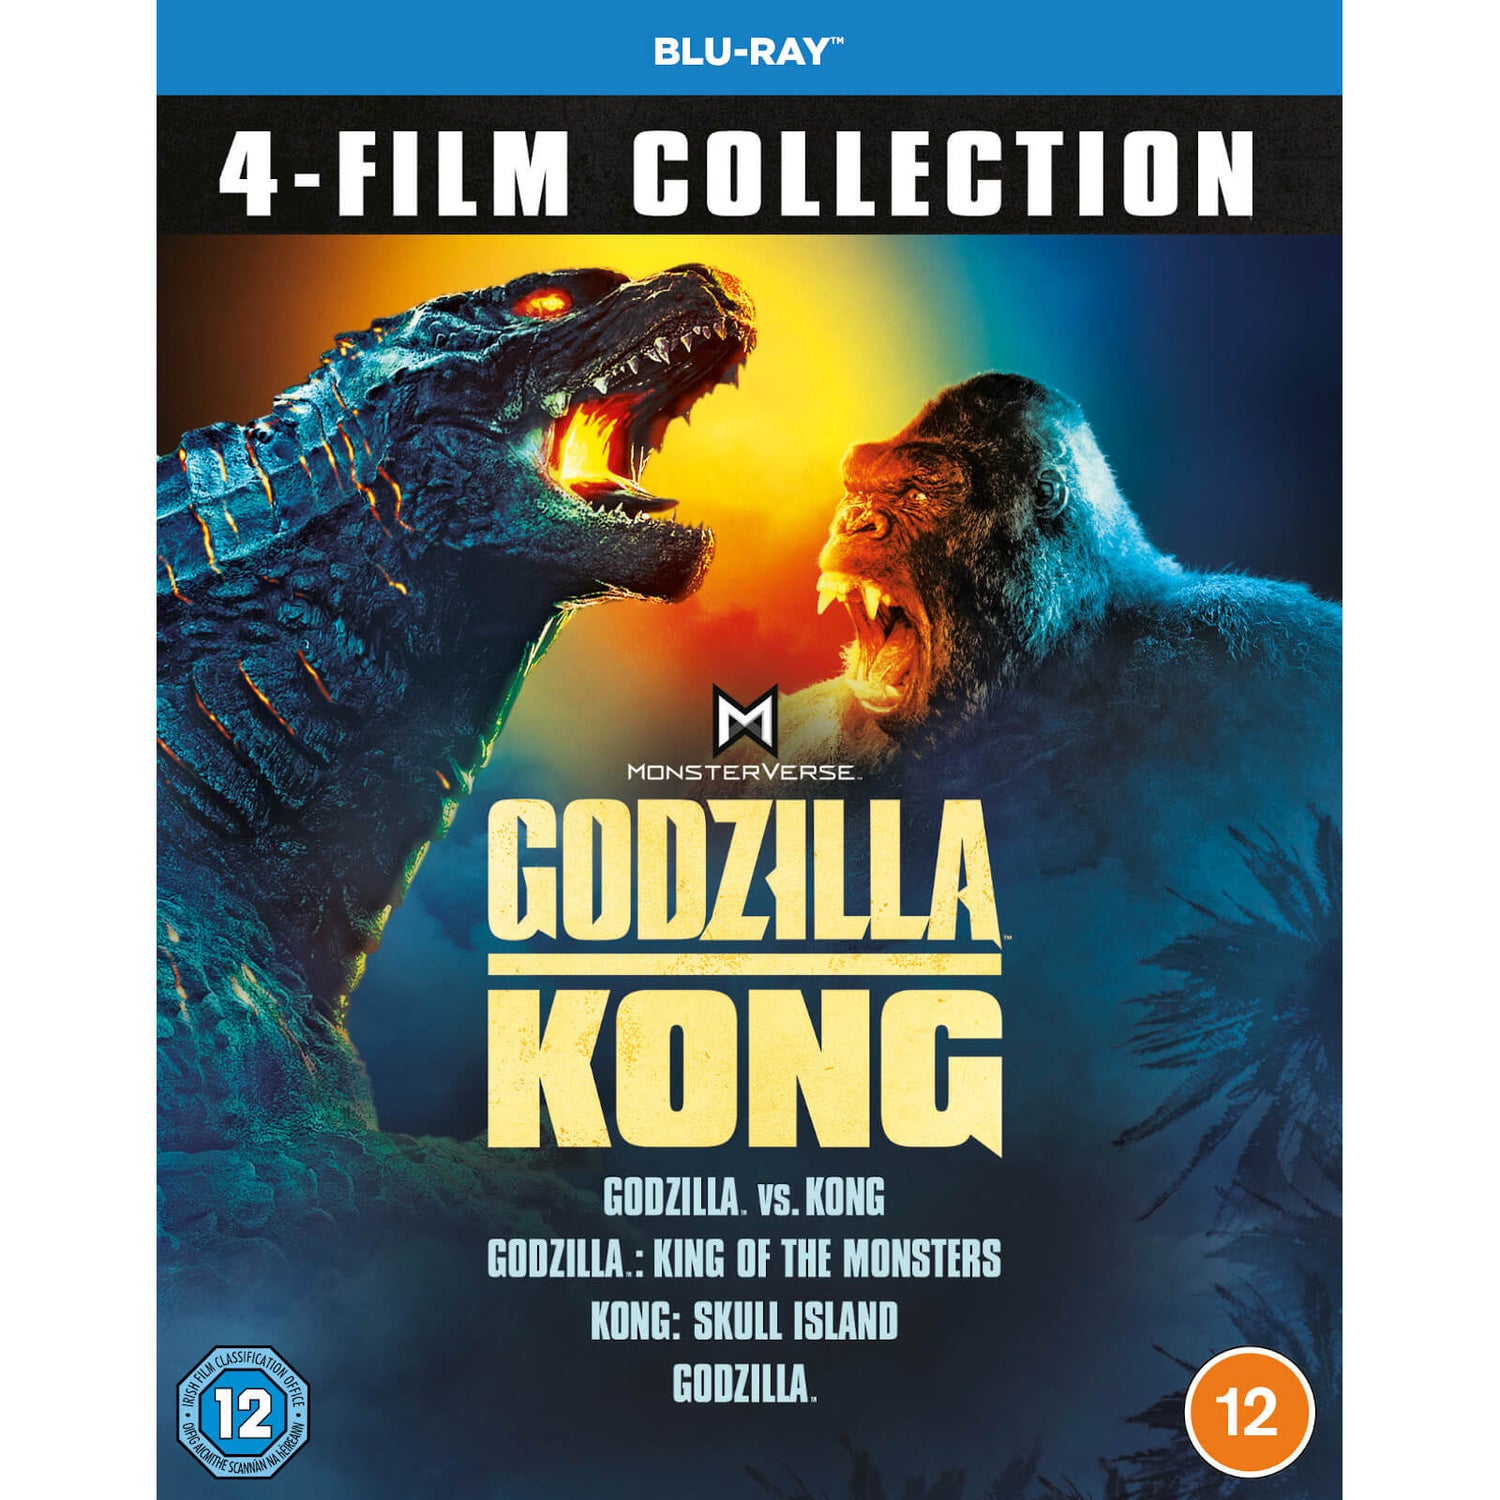 Godzilla and Kong 4-Film Collection